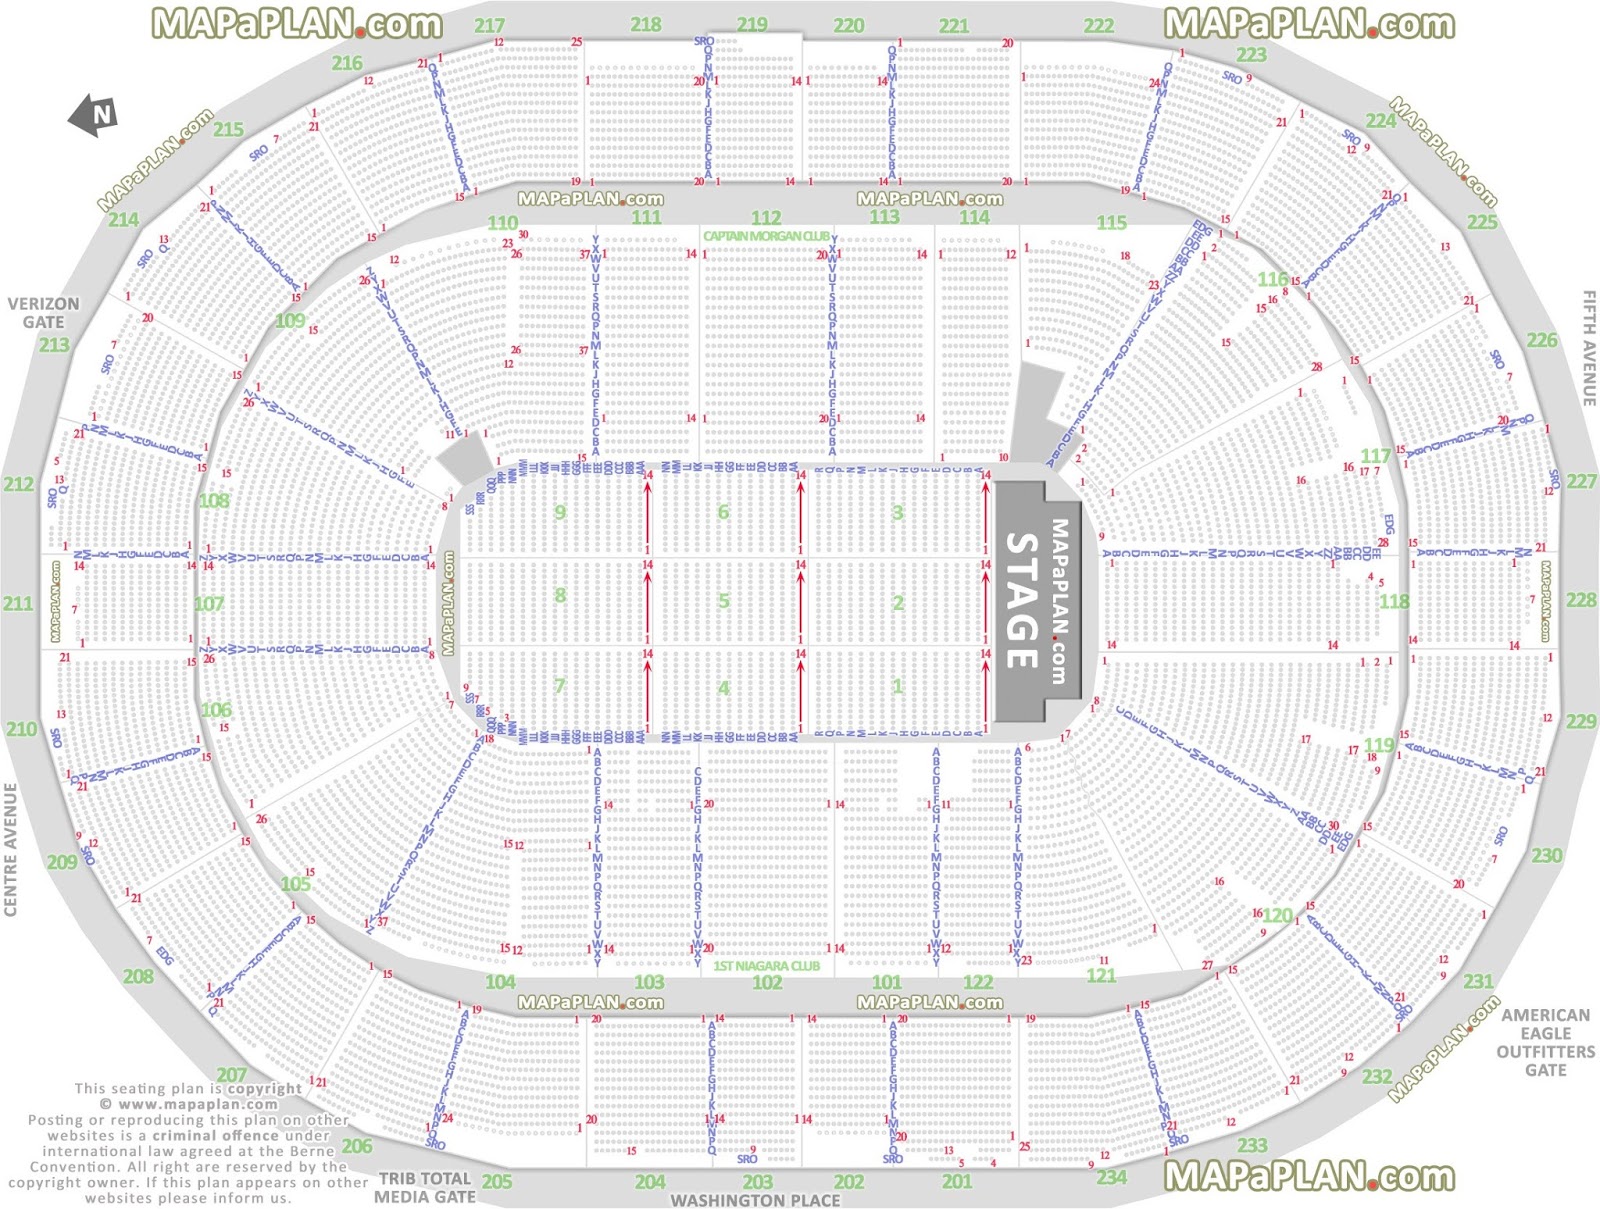 Consol Hockey Seating Chart